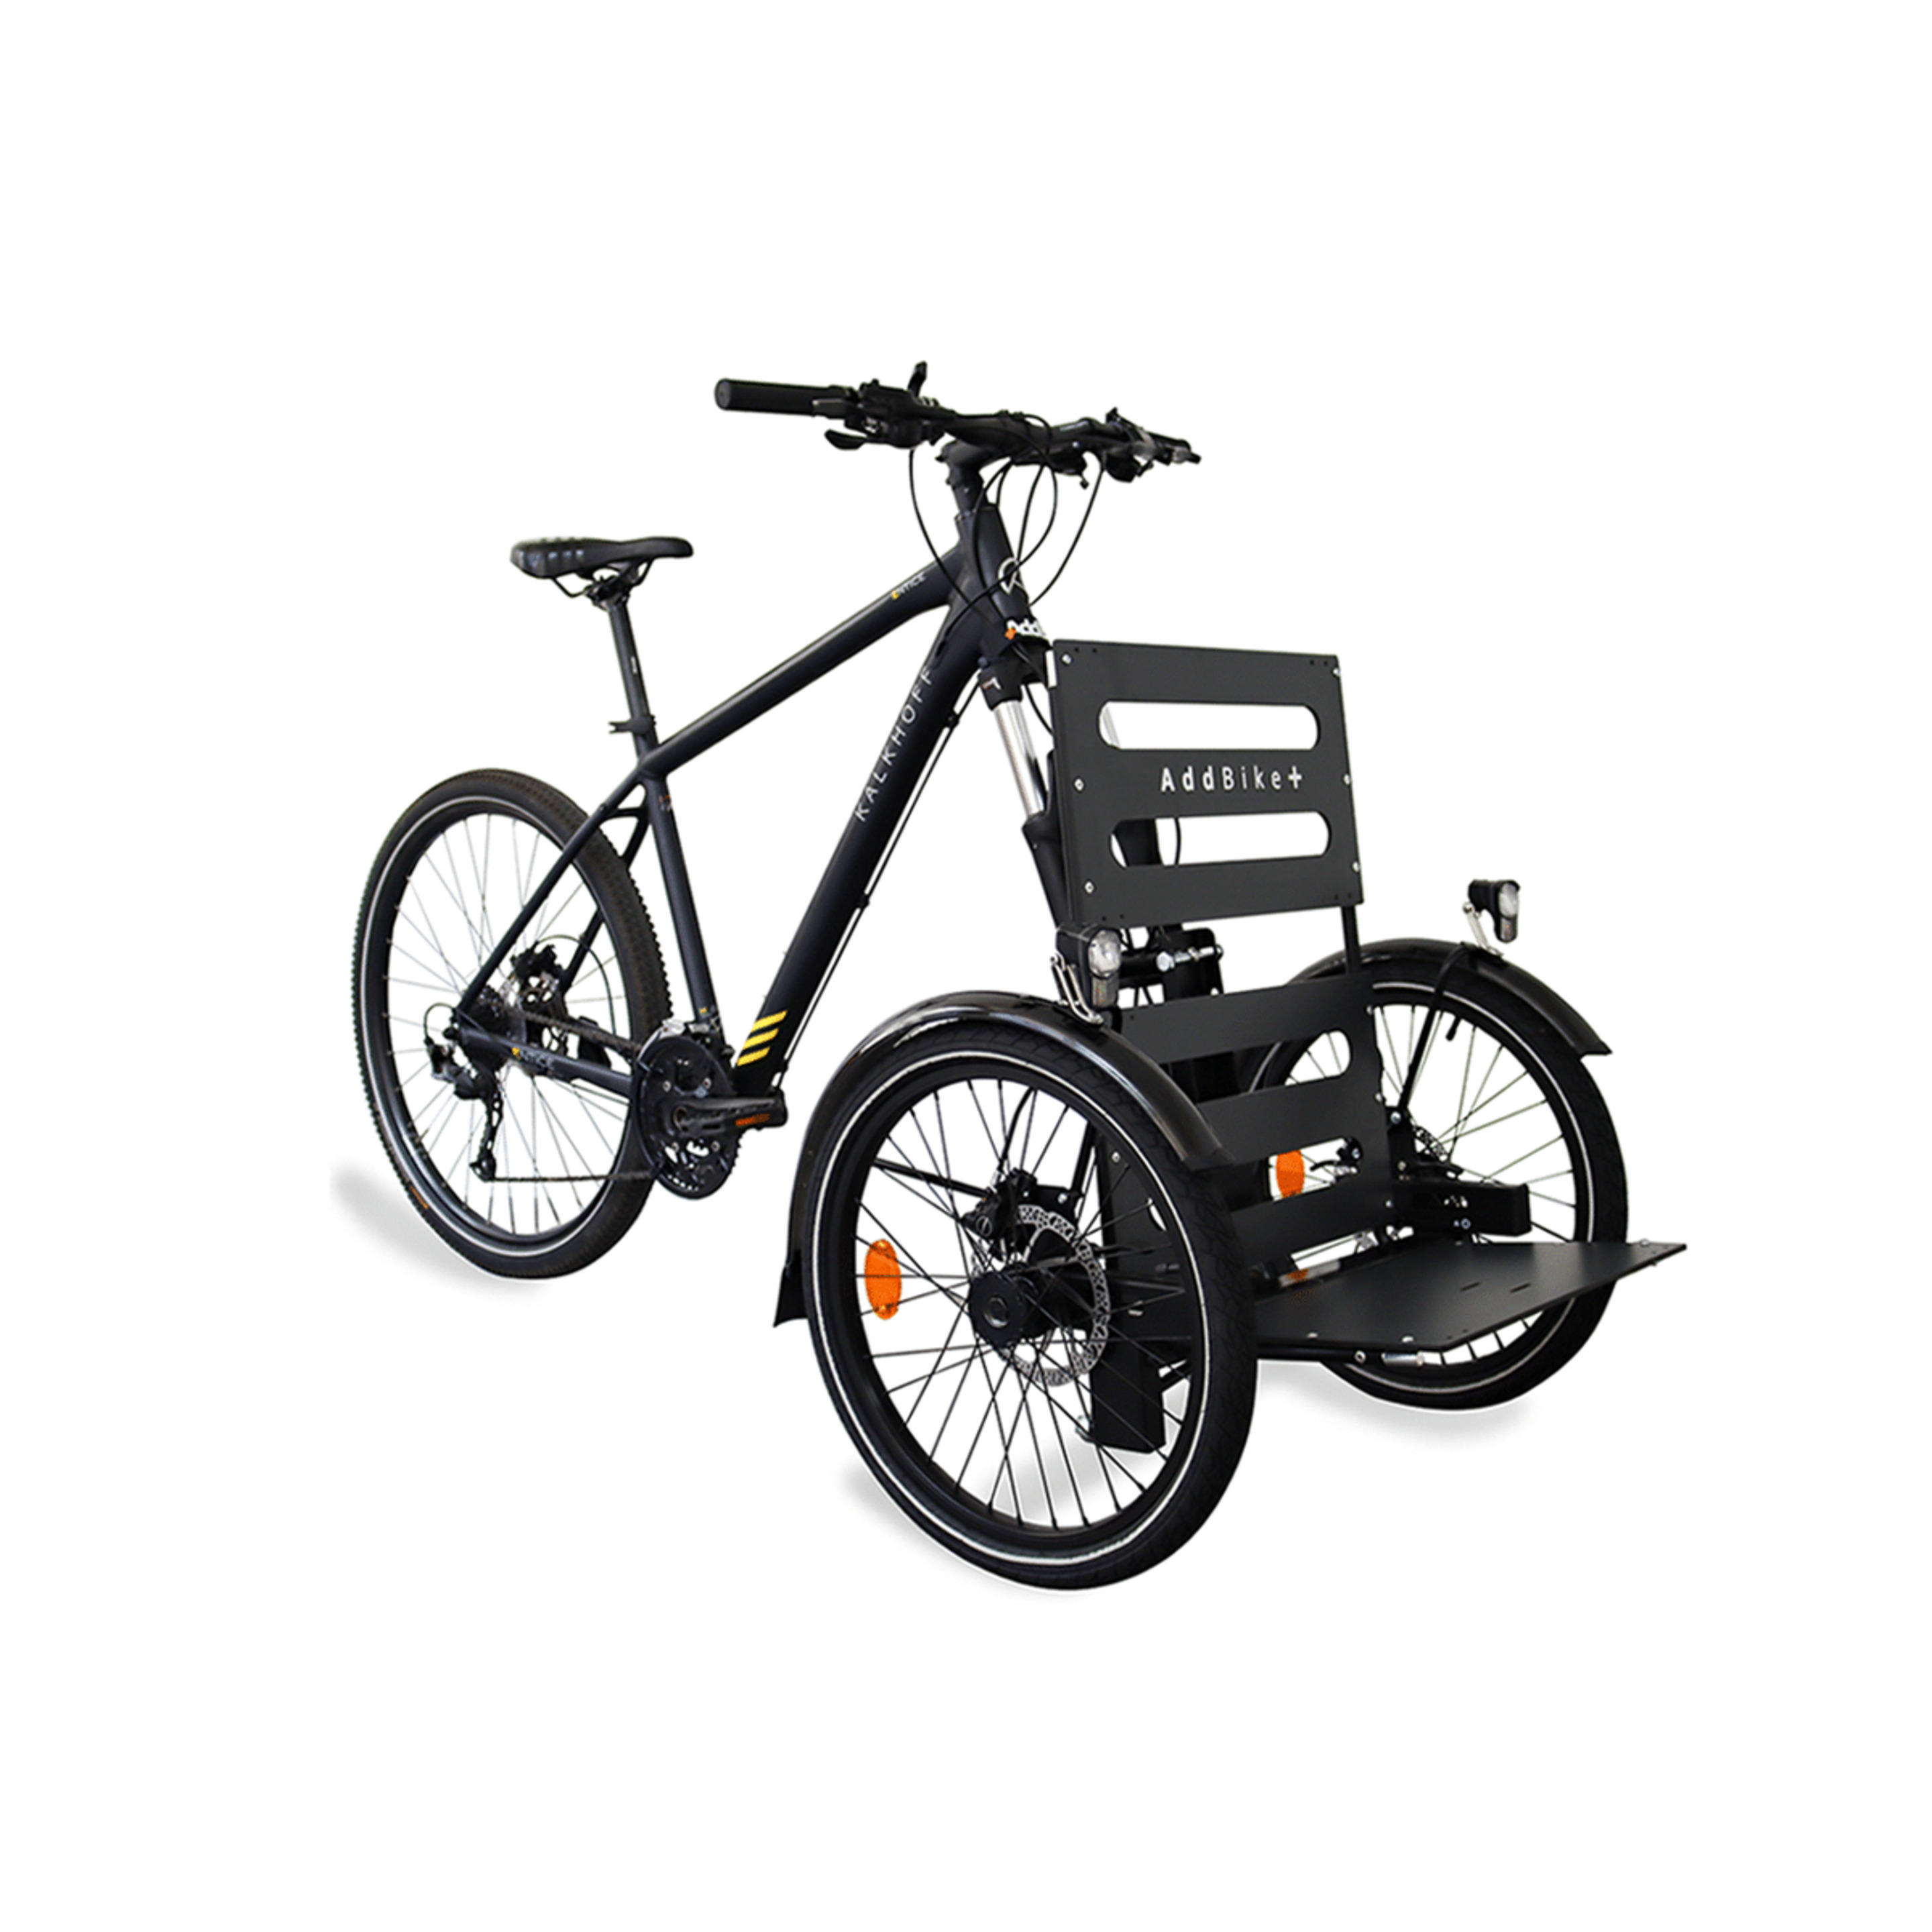 Kit Delantero Bicicleta De Carga Addbike Addbike+ - gris-negro - 